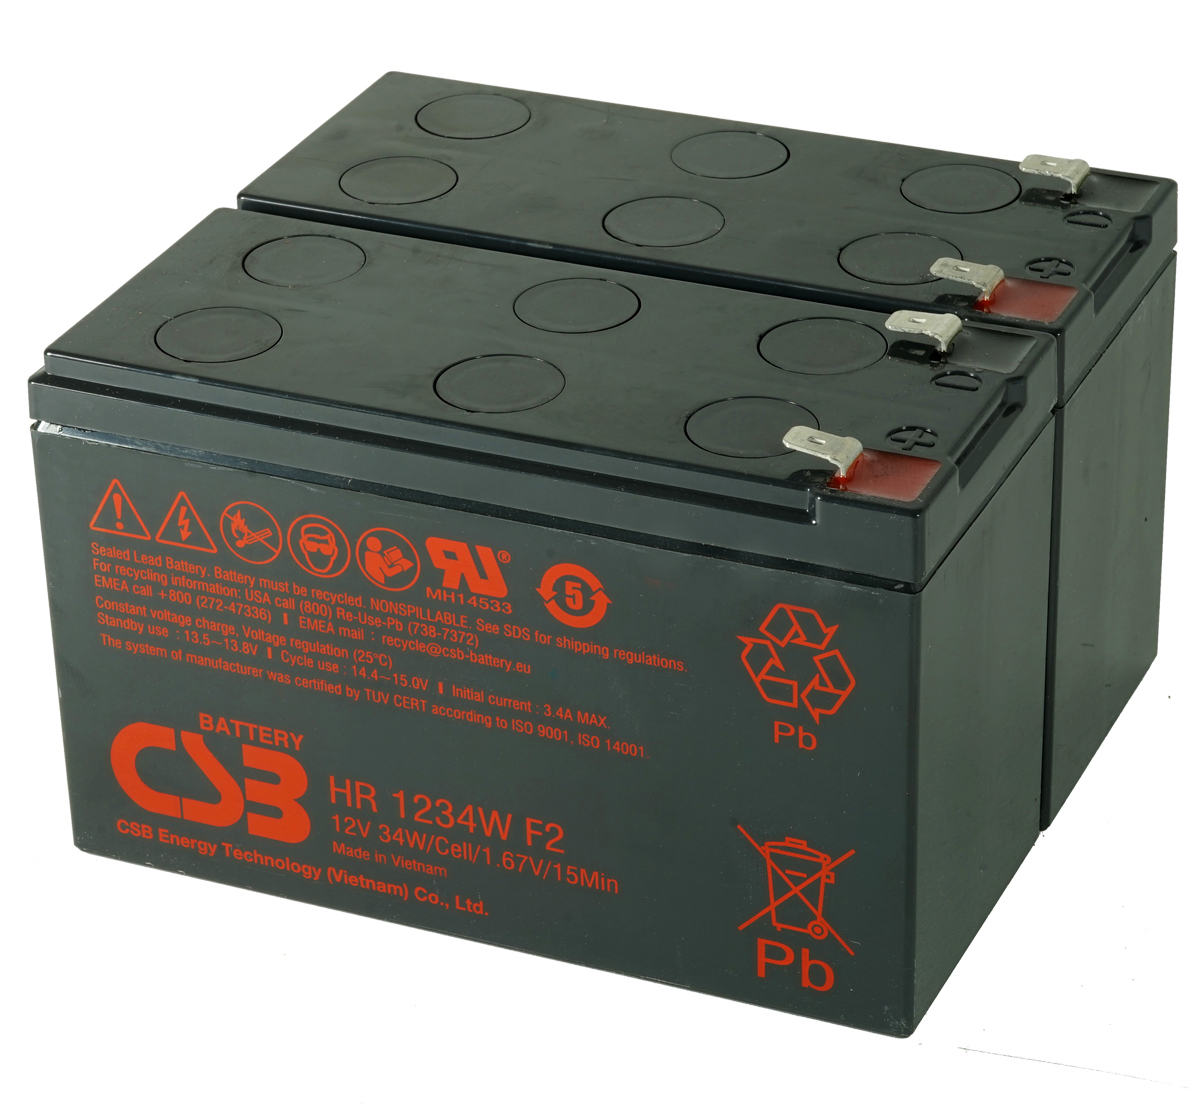 MDS33 UPS Battery Kit - Replaces APC RBC33